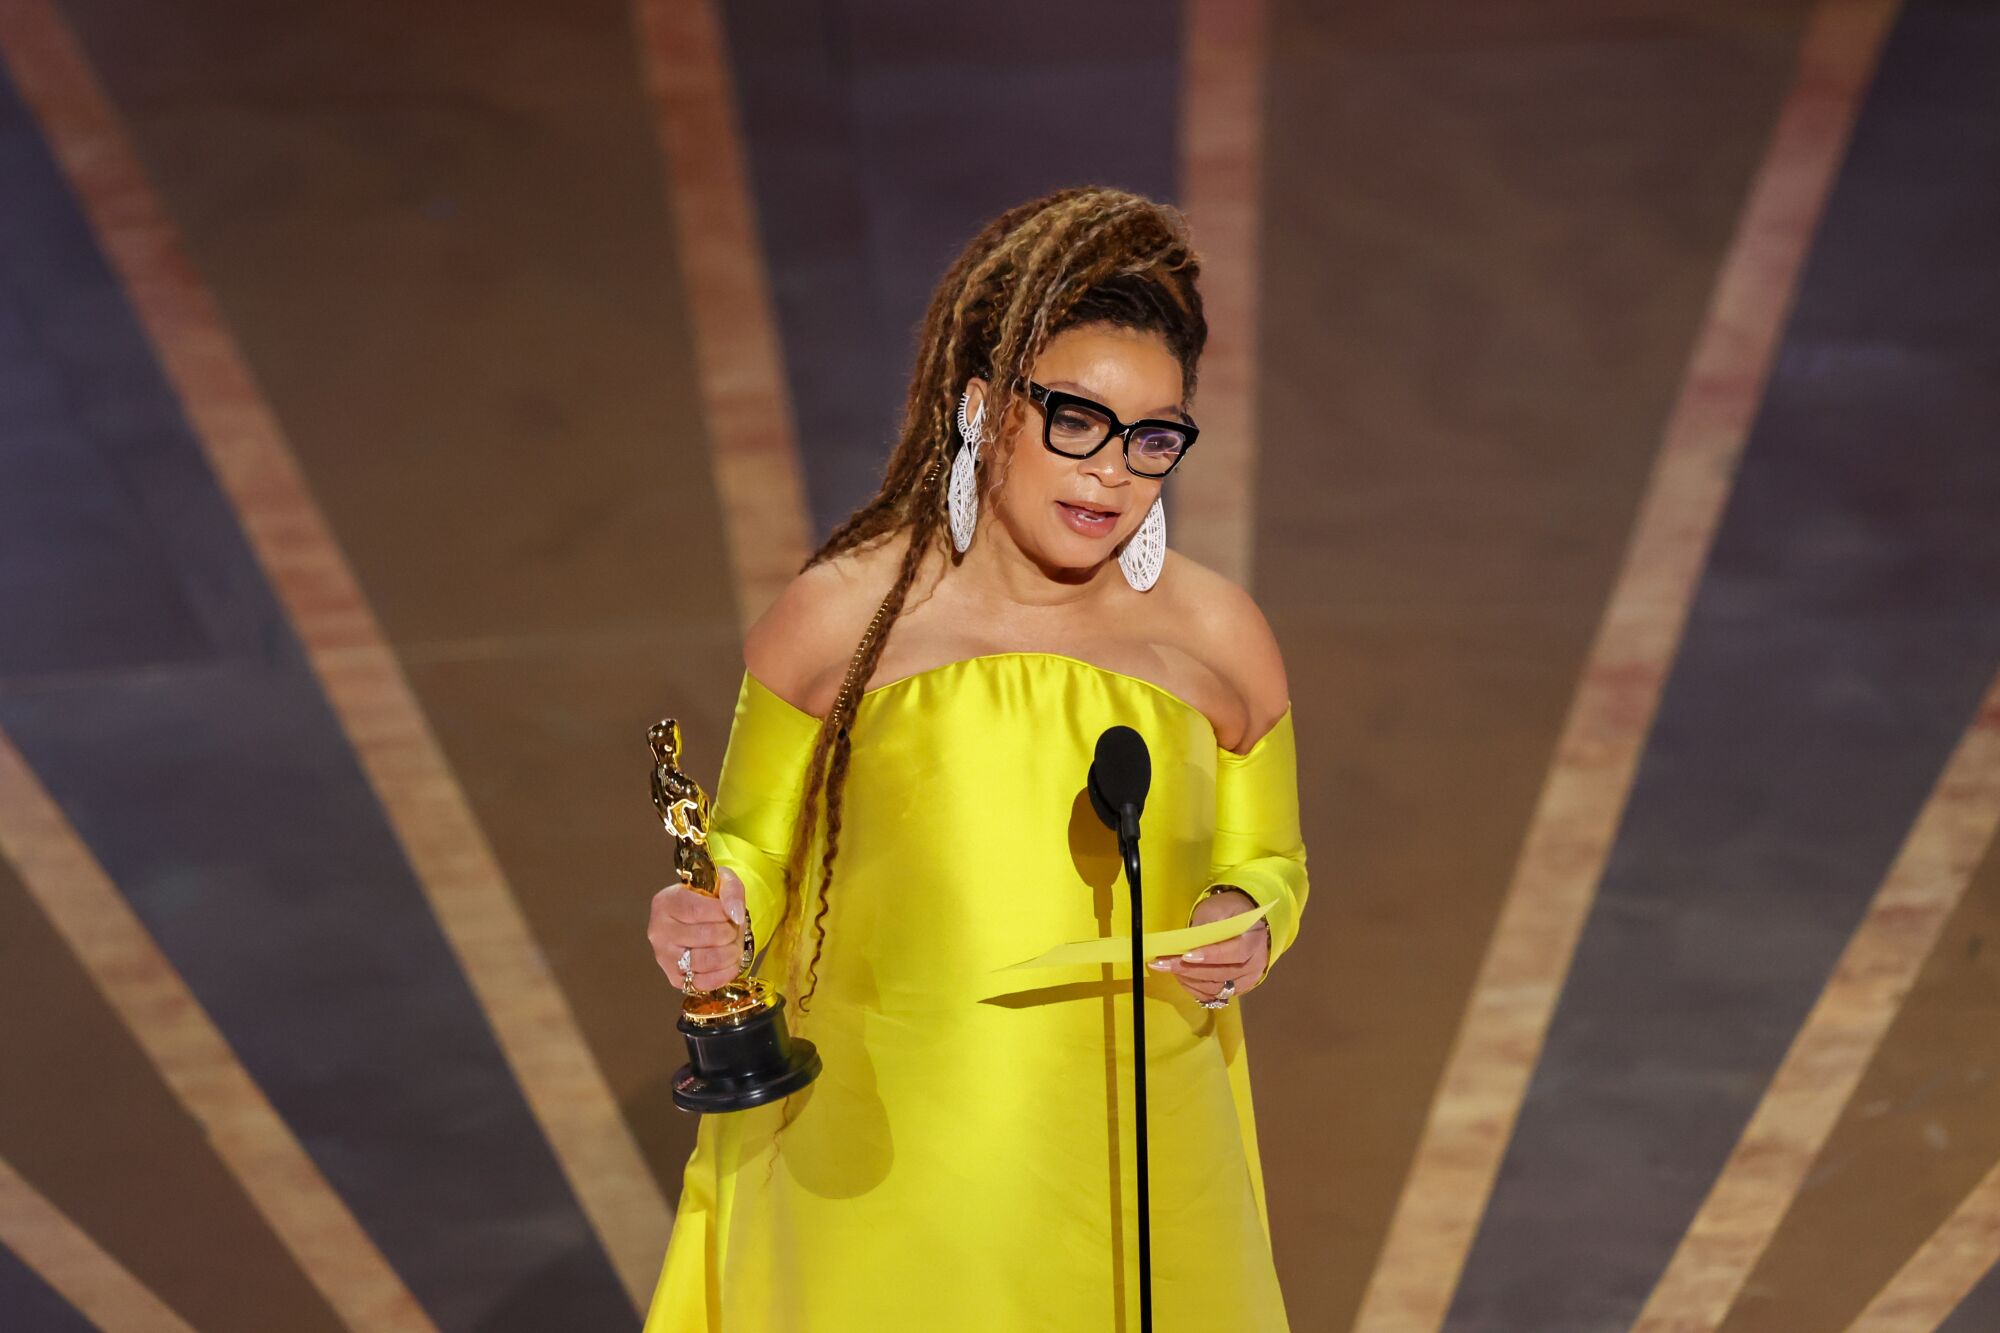 A woman accepts an award.